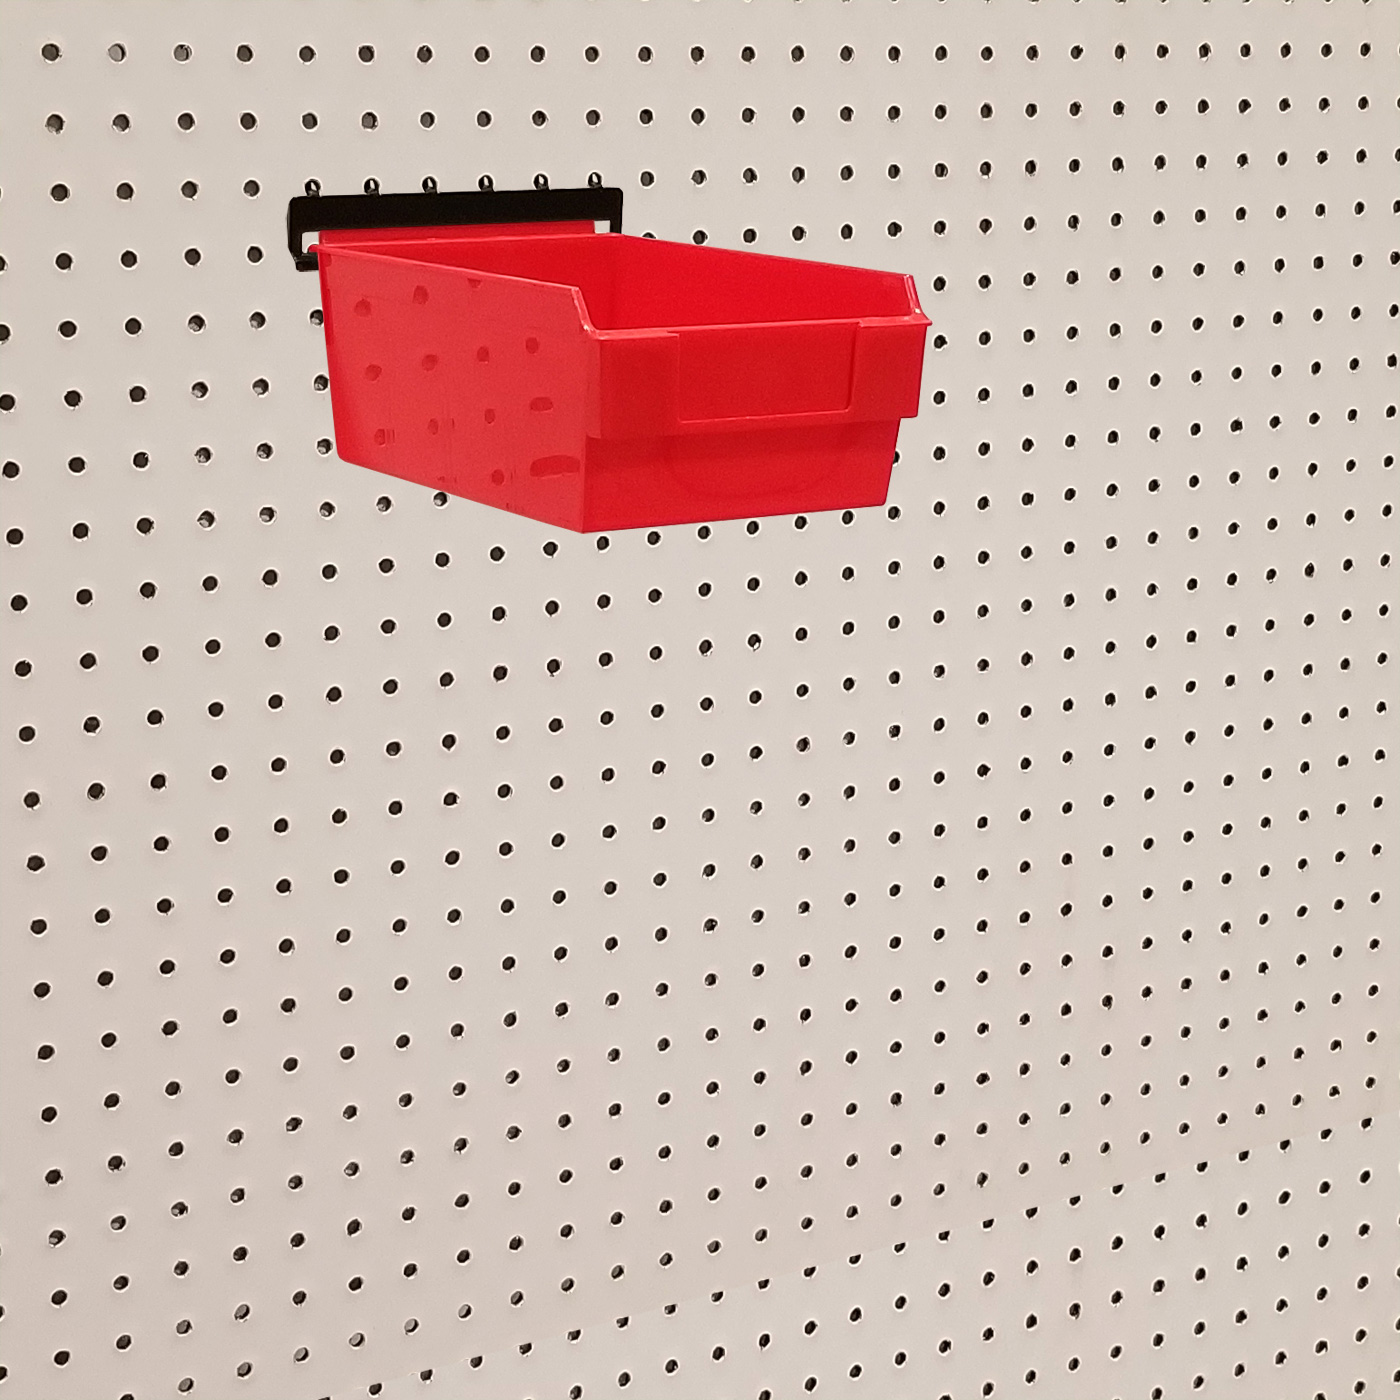 Red Shelfbox 200 Display Bin w/ Peg Adaptor